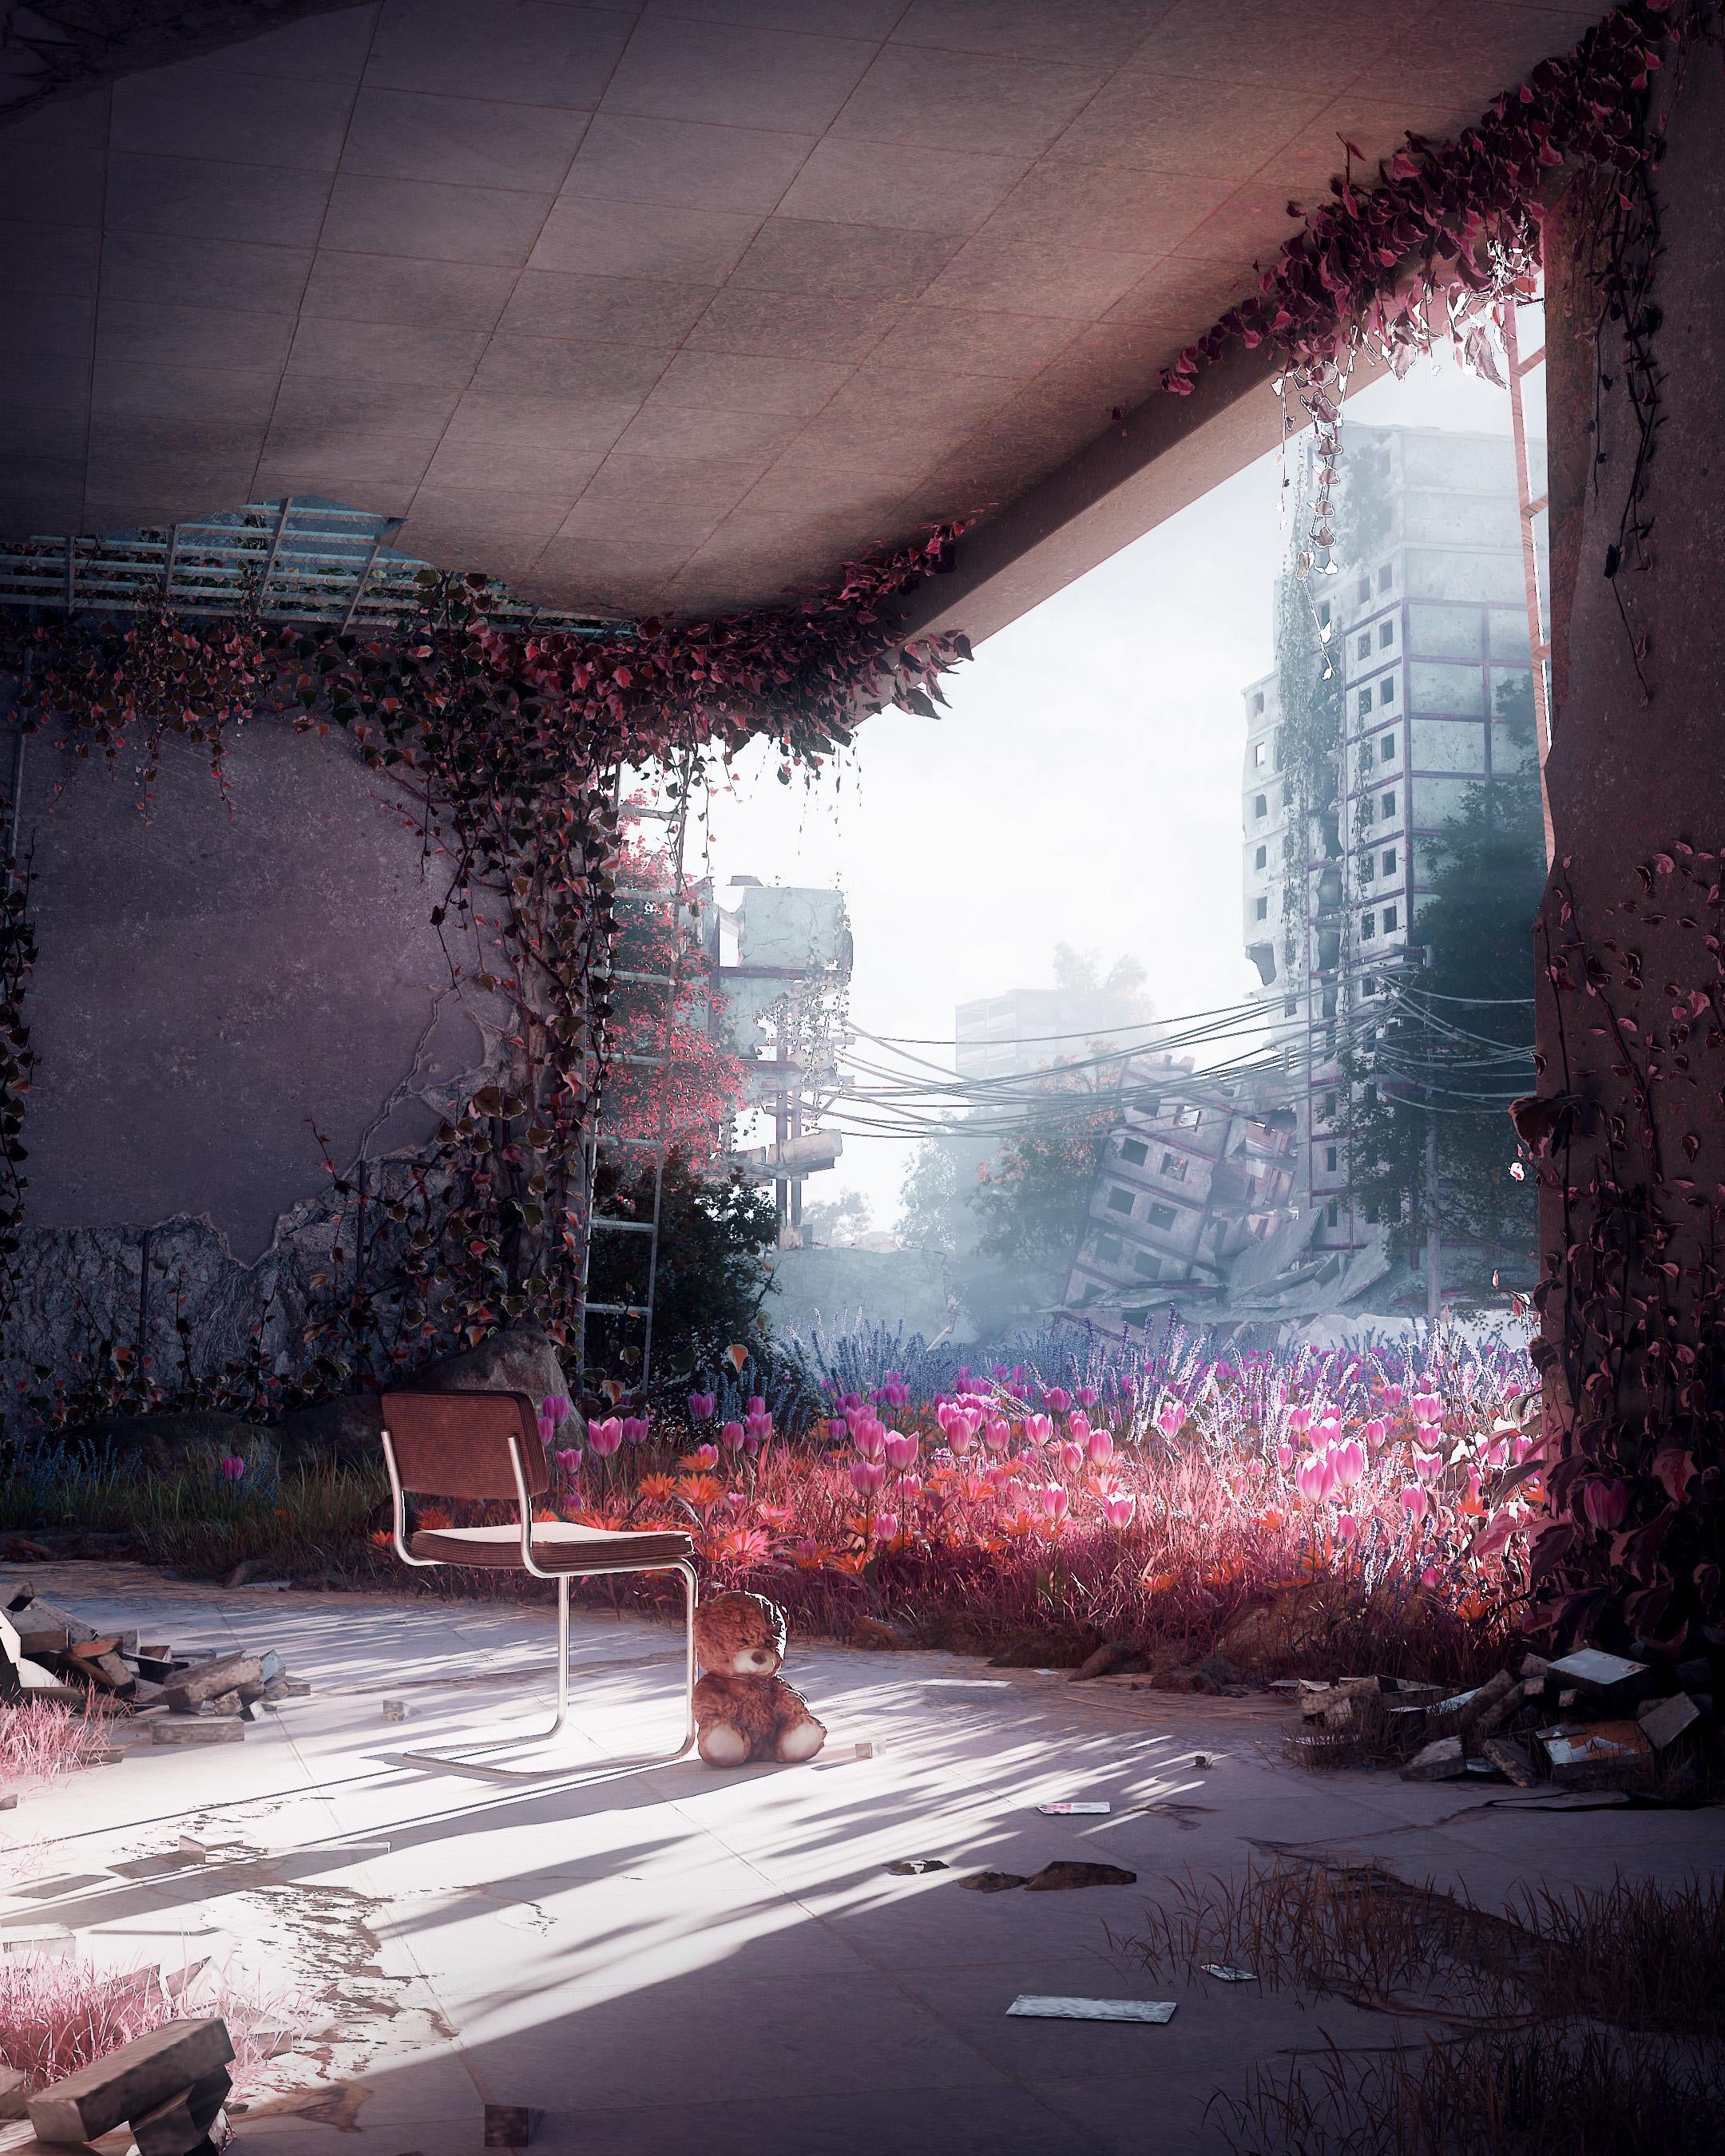 Artwork Digital Art Flowers Urban Decay Building Ruin Ruins Apocalyptic City Science Fiction Chair S 2160x2700